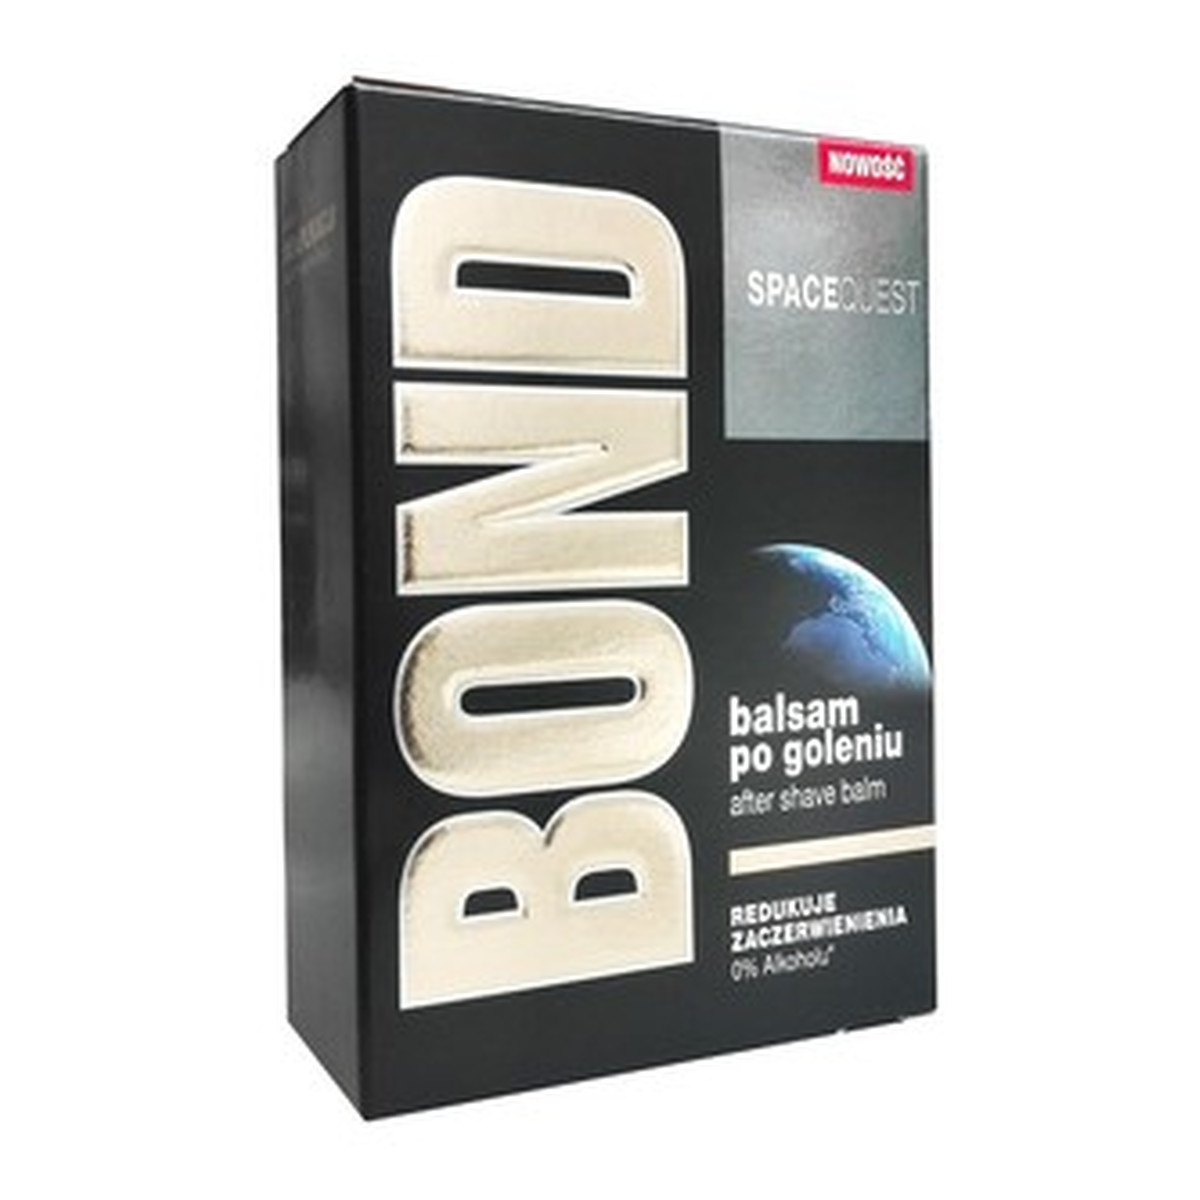 Bond Spacequest Balsam Po Goleniu 150ml